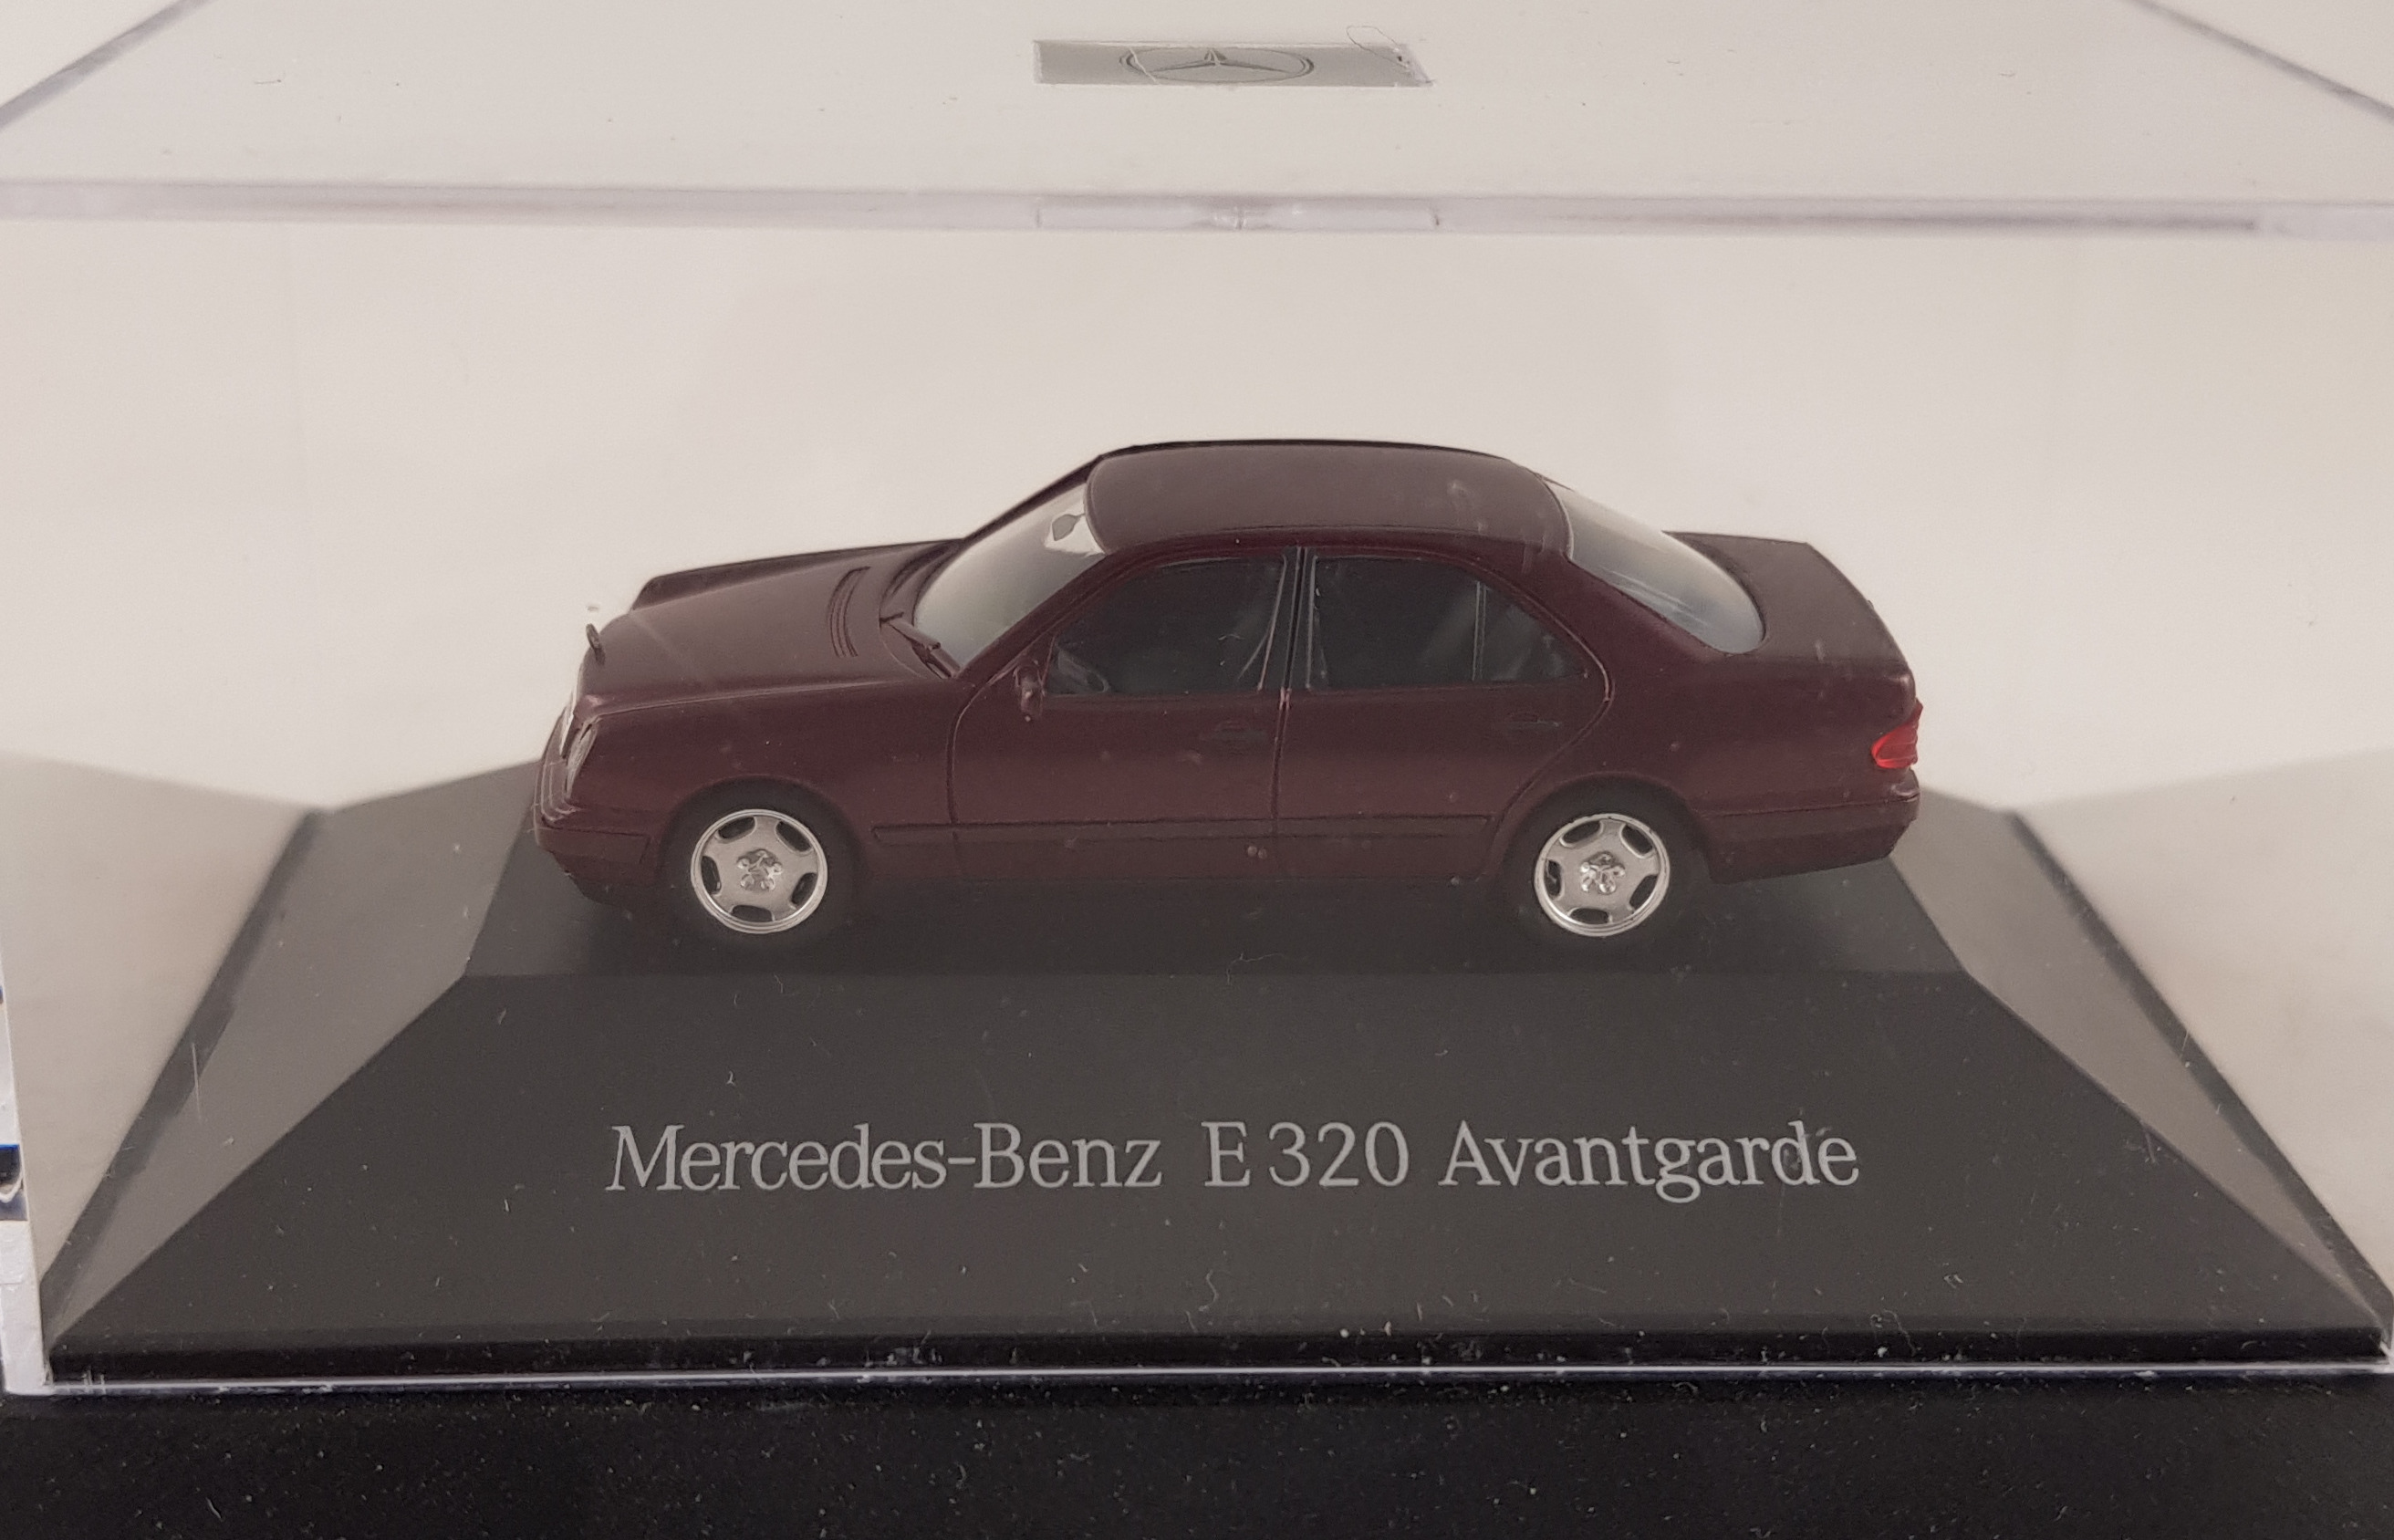 Herpa Personbil Mercedes E320 Avantgarde, SH0159, skala H0, K16